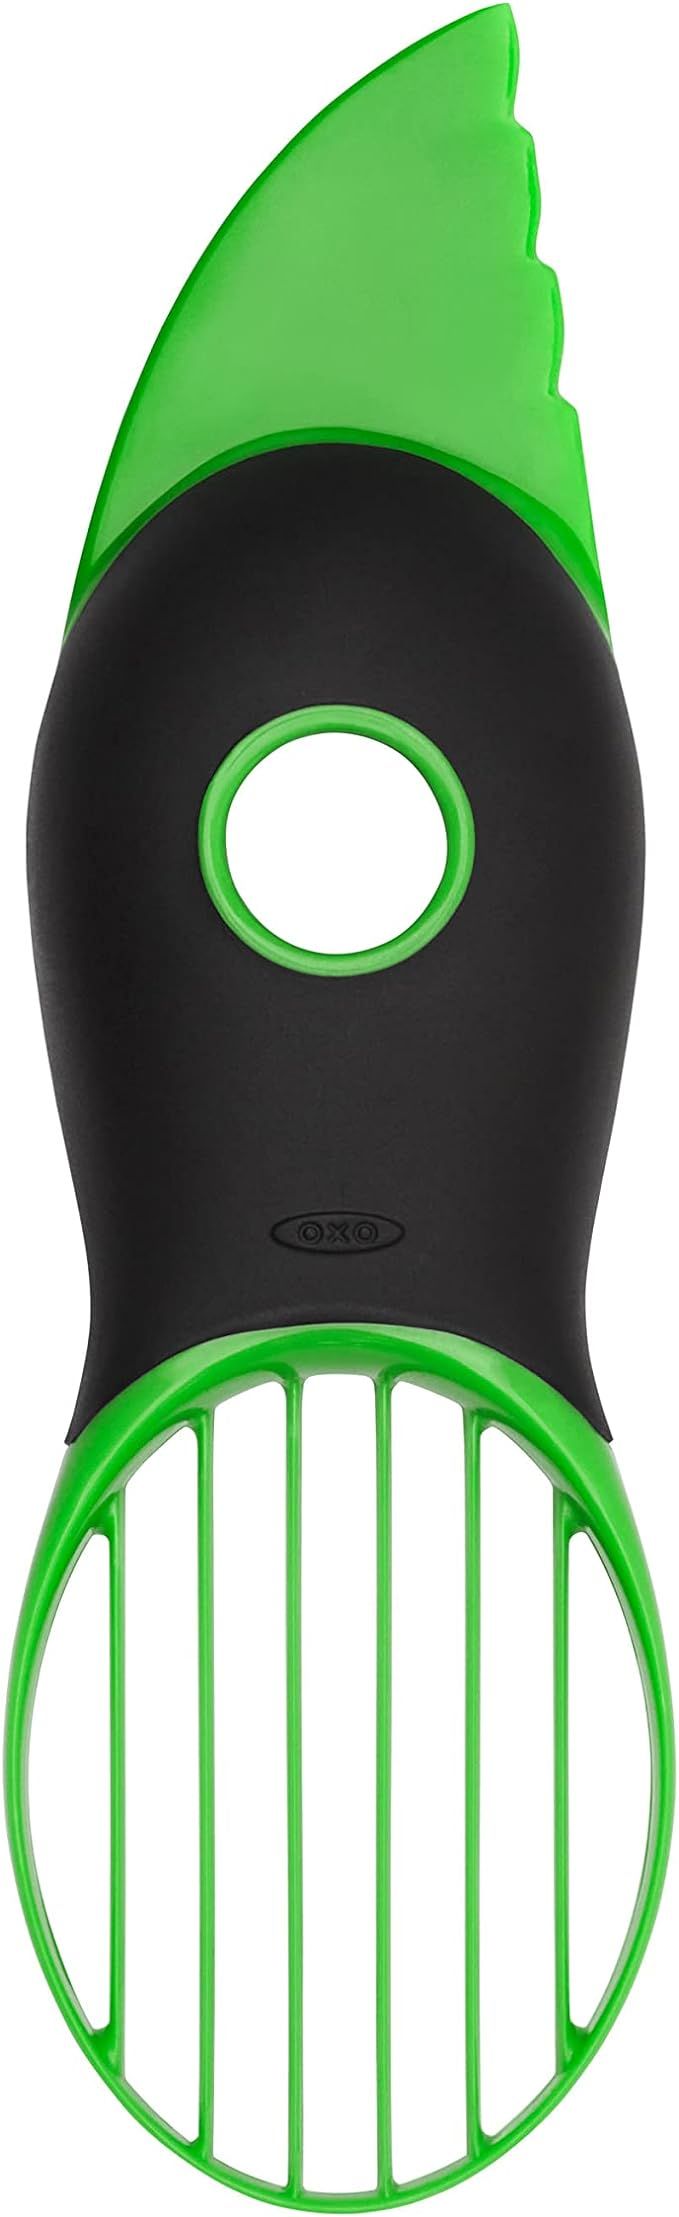 OXO Good Grips 3-in-1 Avocado Slicer - Green | Amazon (US)